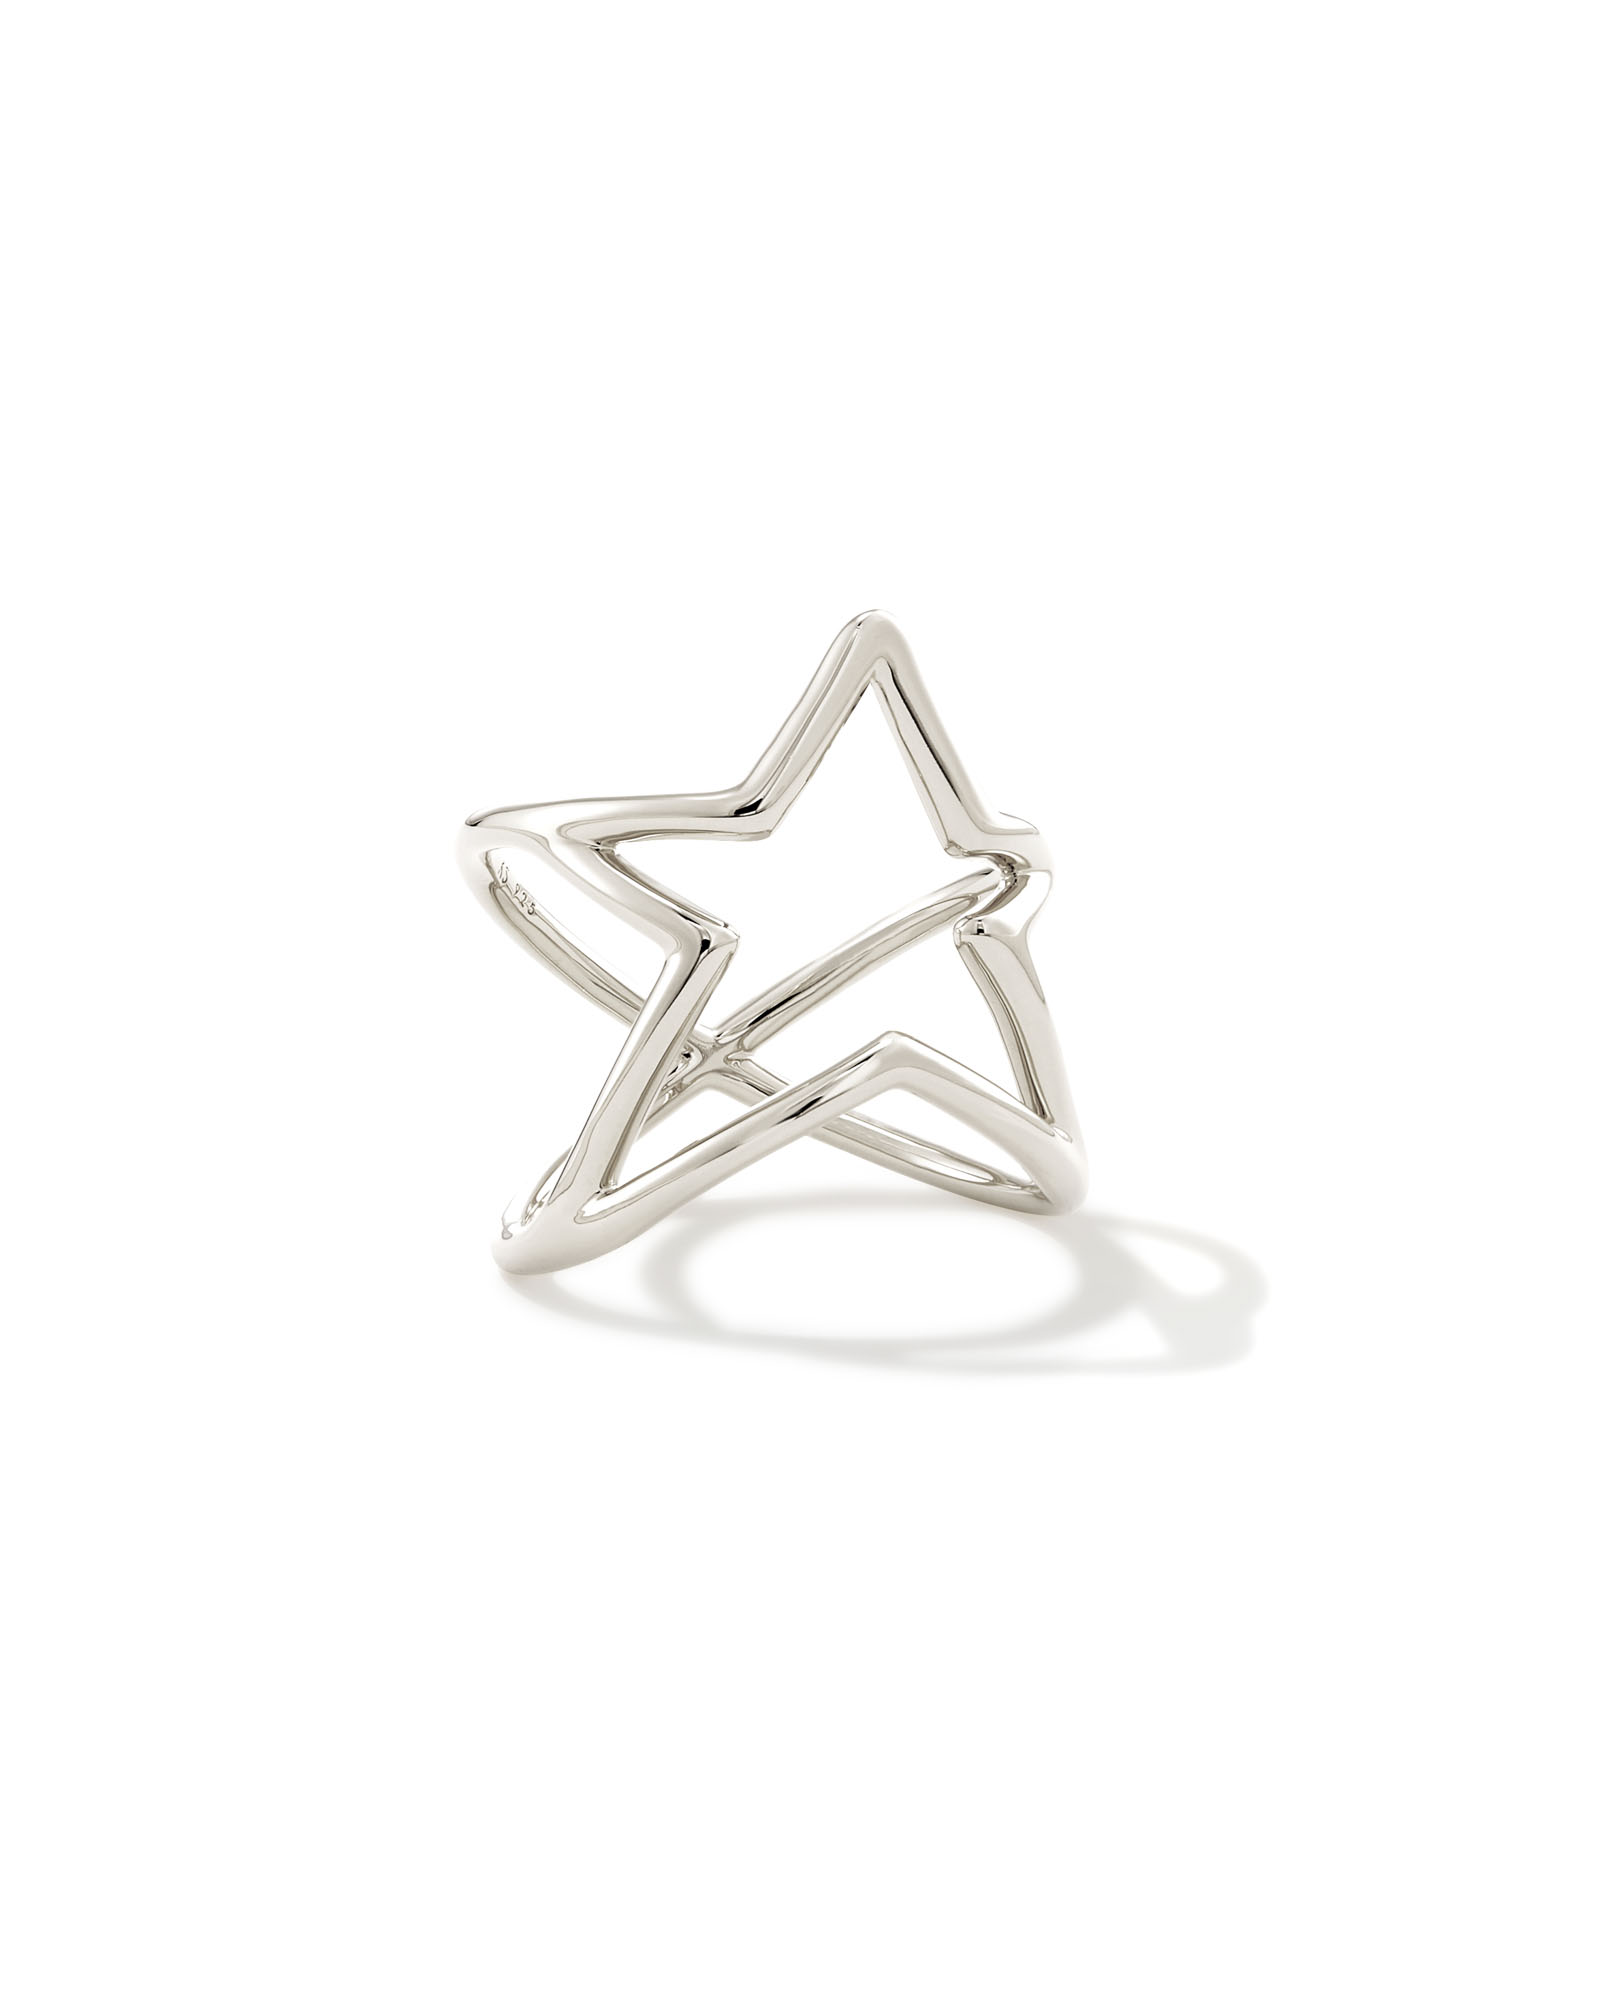 Open Star Statement Ring in Sterling Silver | Kendra Scott